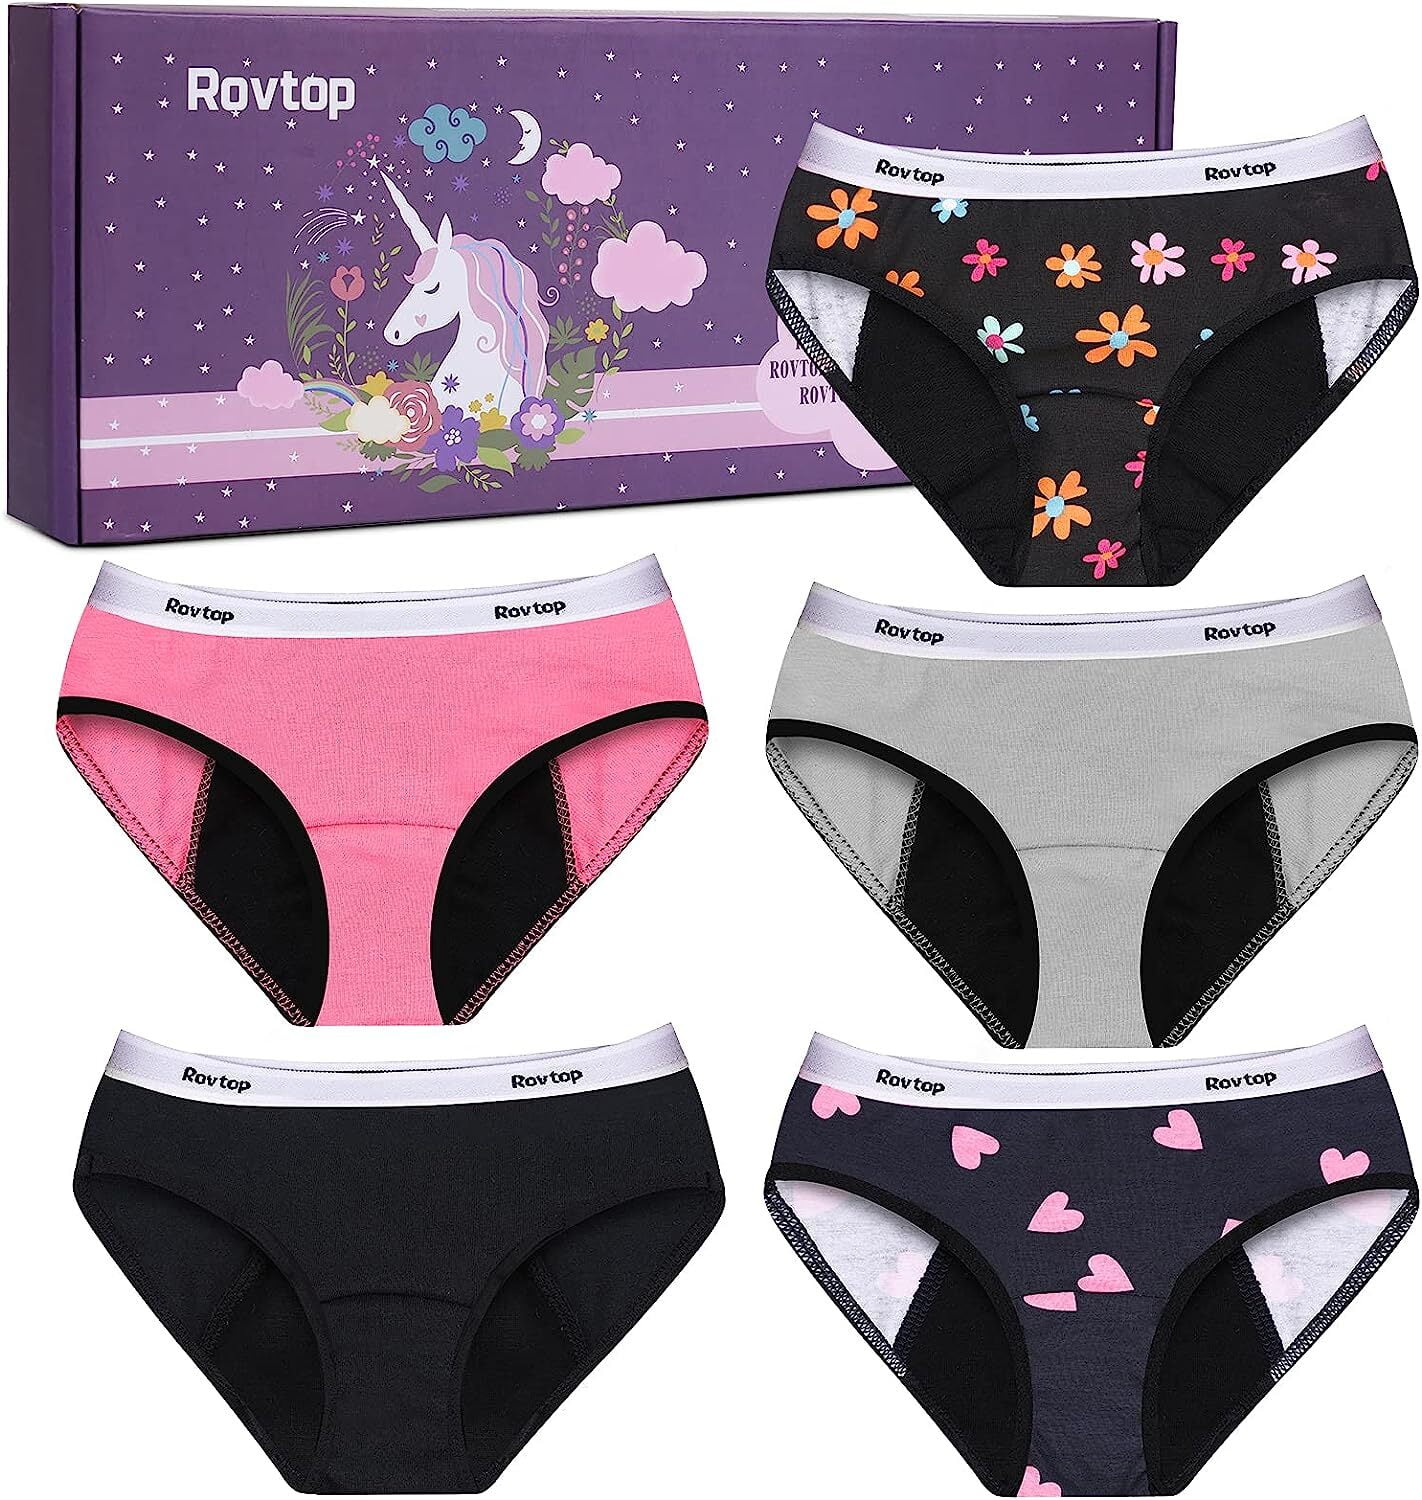 TQWQT Teen Big Girls Frist Period Panties Cotton Menstrual Underwear  Leak-Proof Protective Briefs Pack of 6 